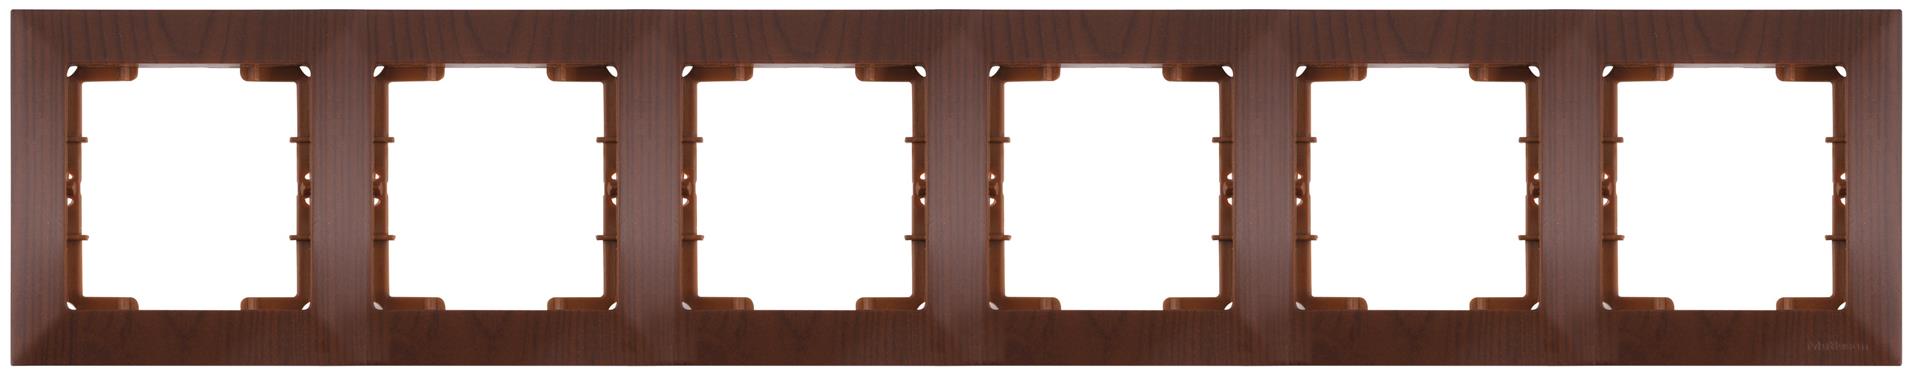 6 fach Rahmen horizontal Walnuss (CANDELA Holz Optik)